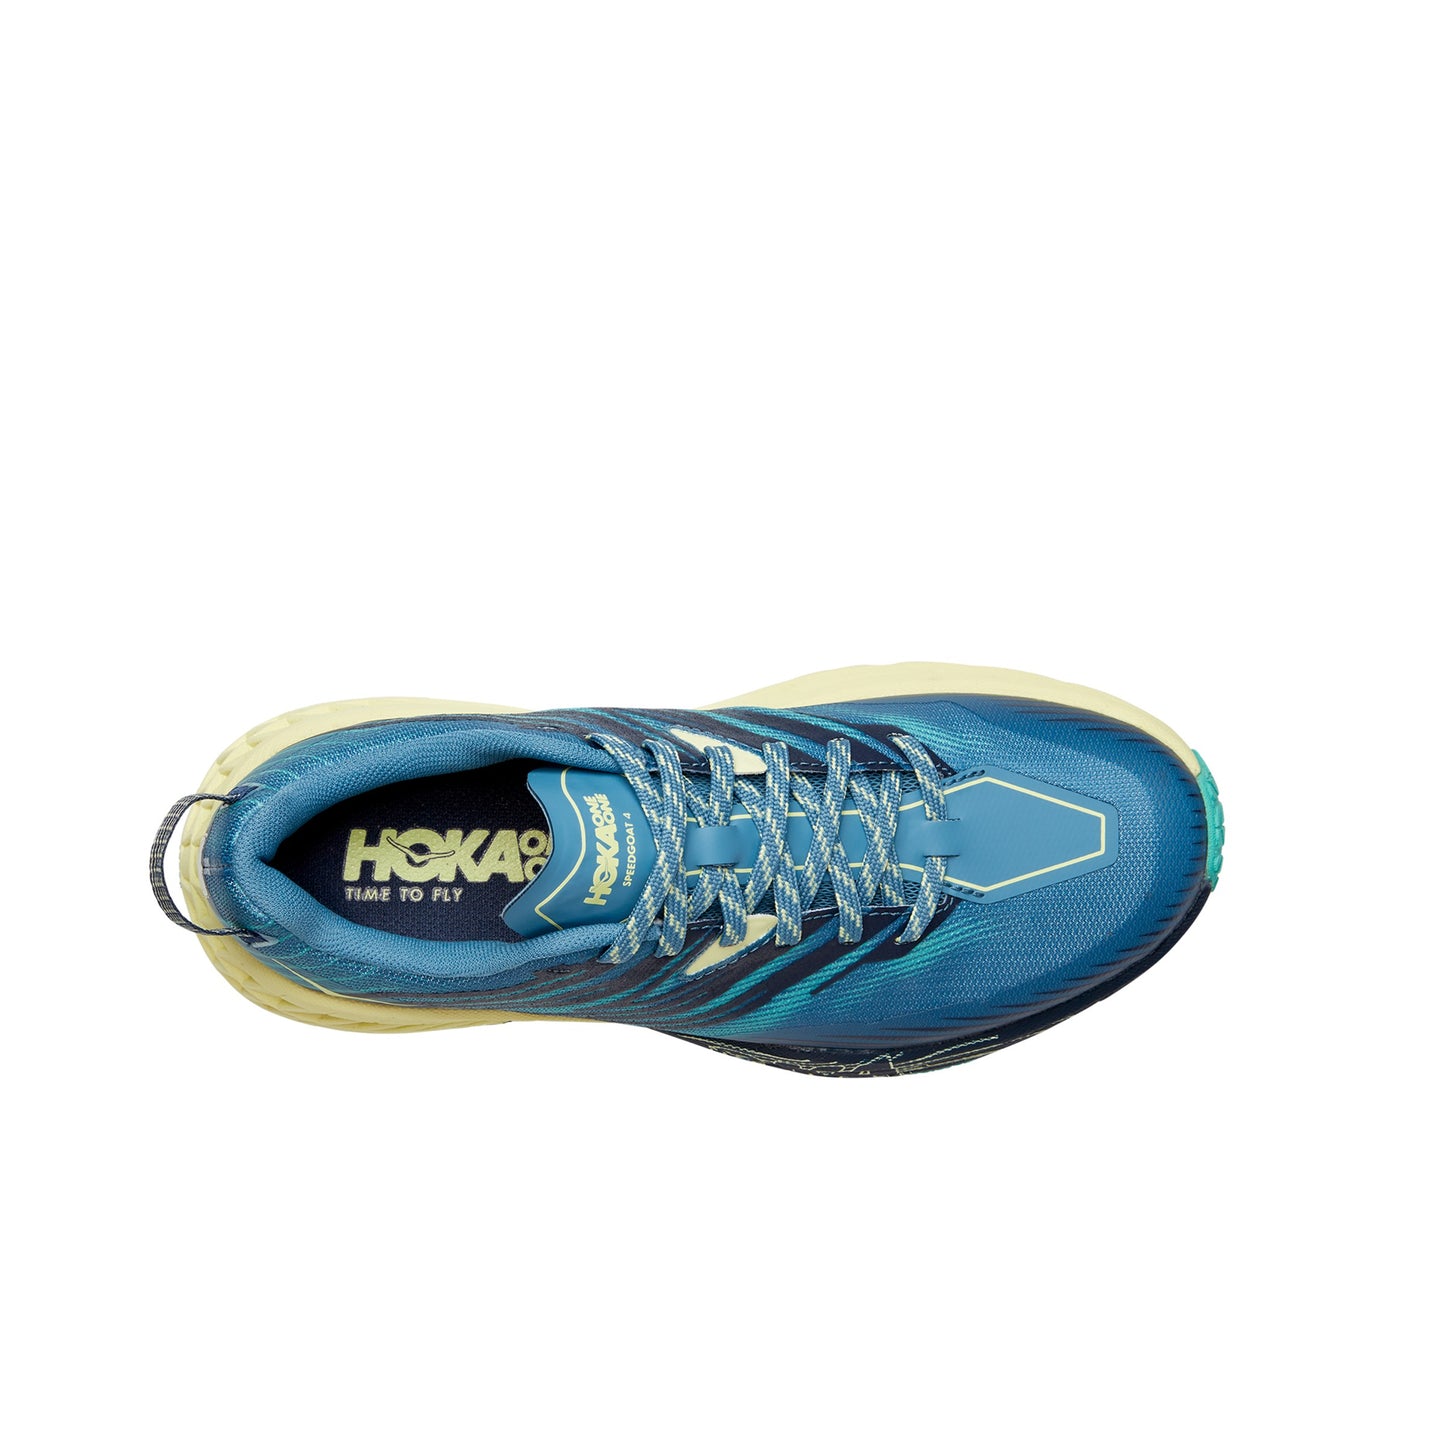 Hoka Speedgoat 4 Wide -  נעלי ספורט הוקה ספידגוט רחבות לנשים